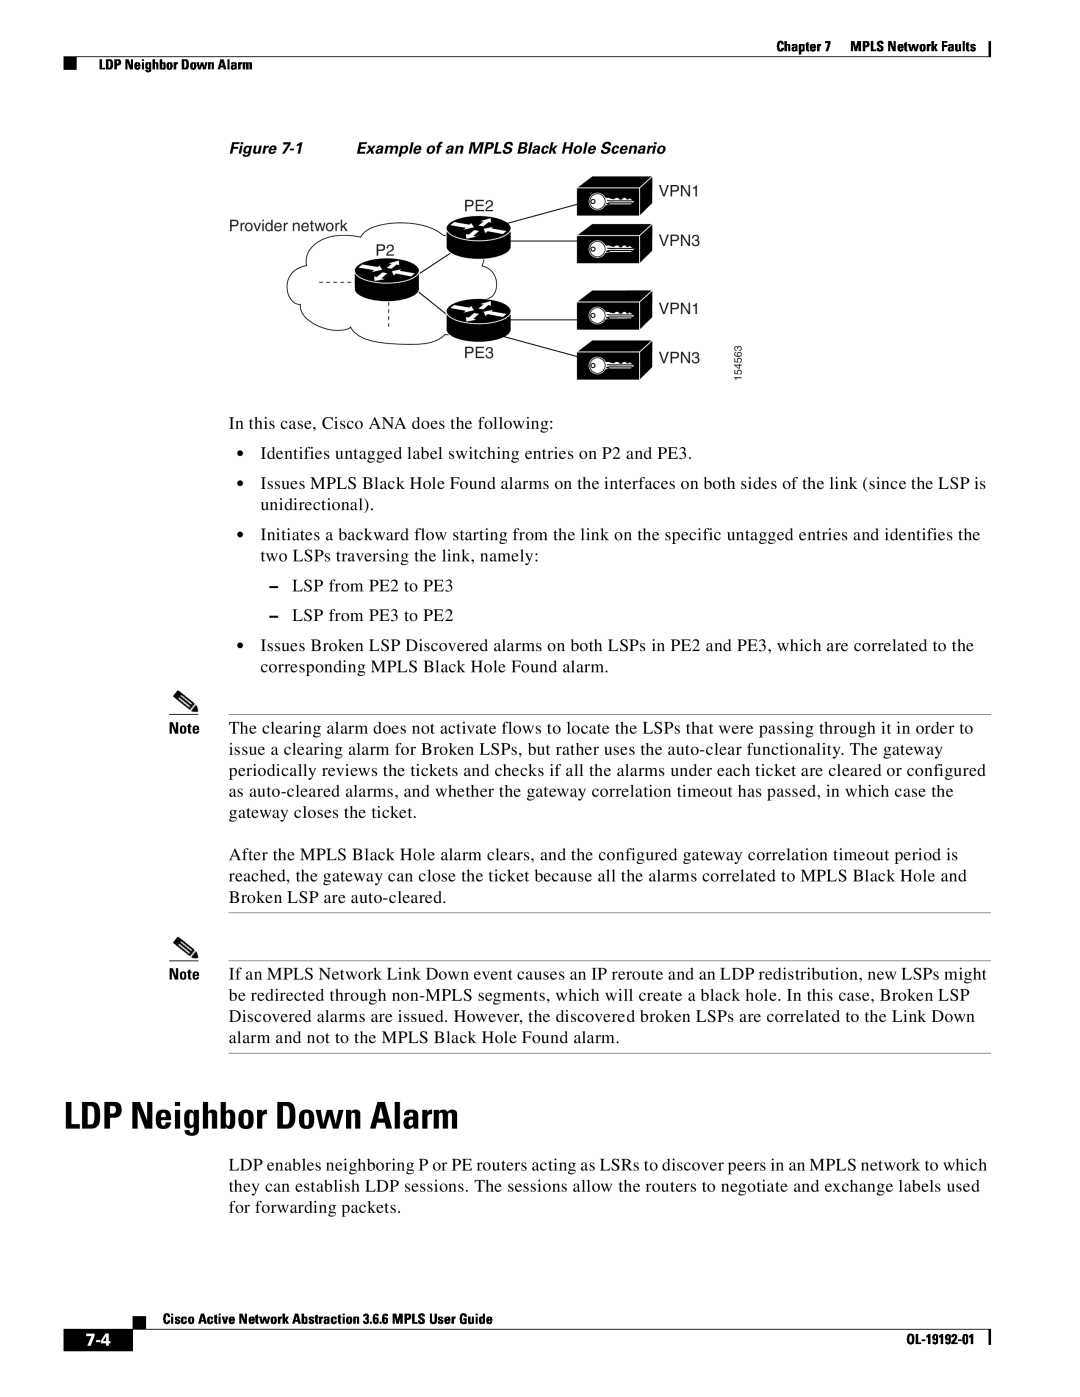 Cisco Systems 3.6.6 manual LDP Neighbor Down Alarm 